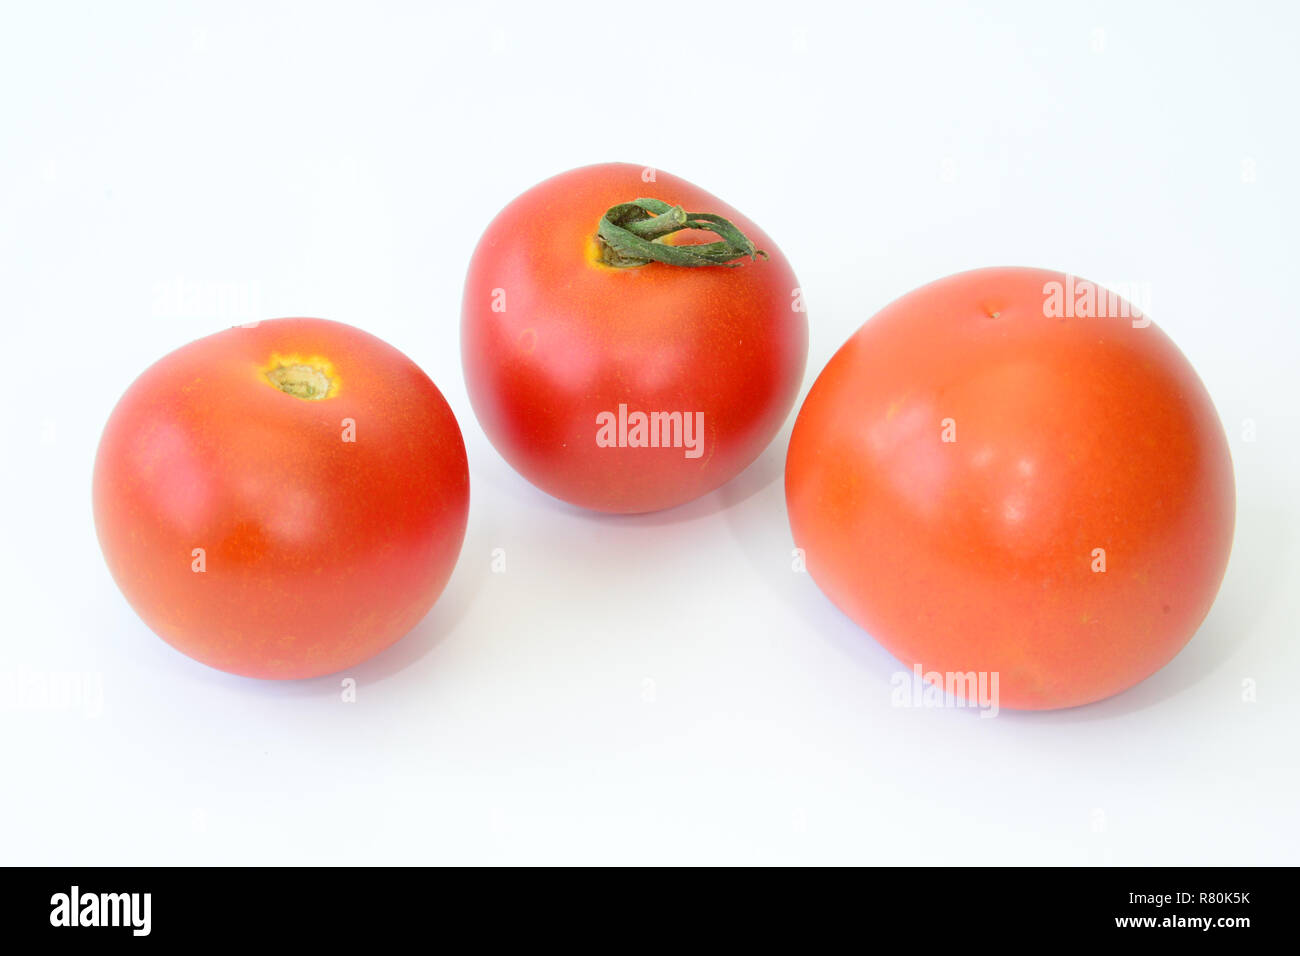 Tomato (Solanum lycopersicumm), variety: Harzfeuer. Three ripe fruit. Studio picture against a white background Stock Photo